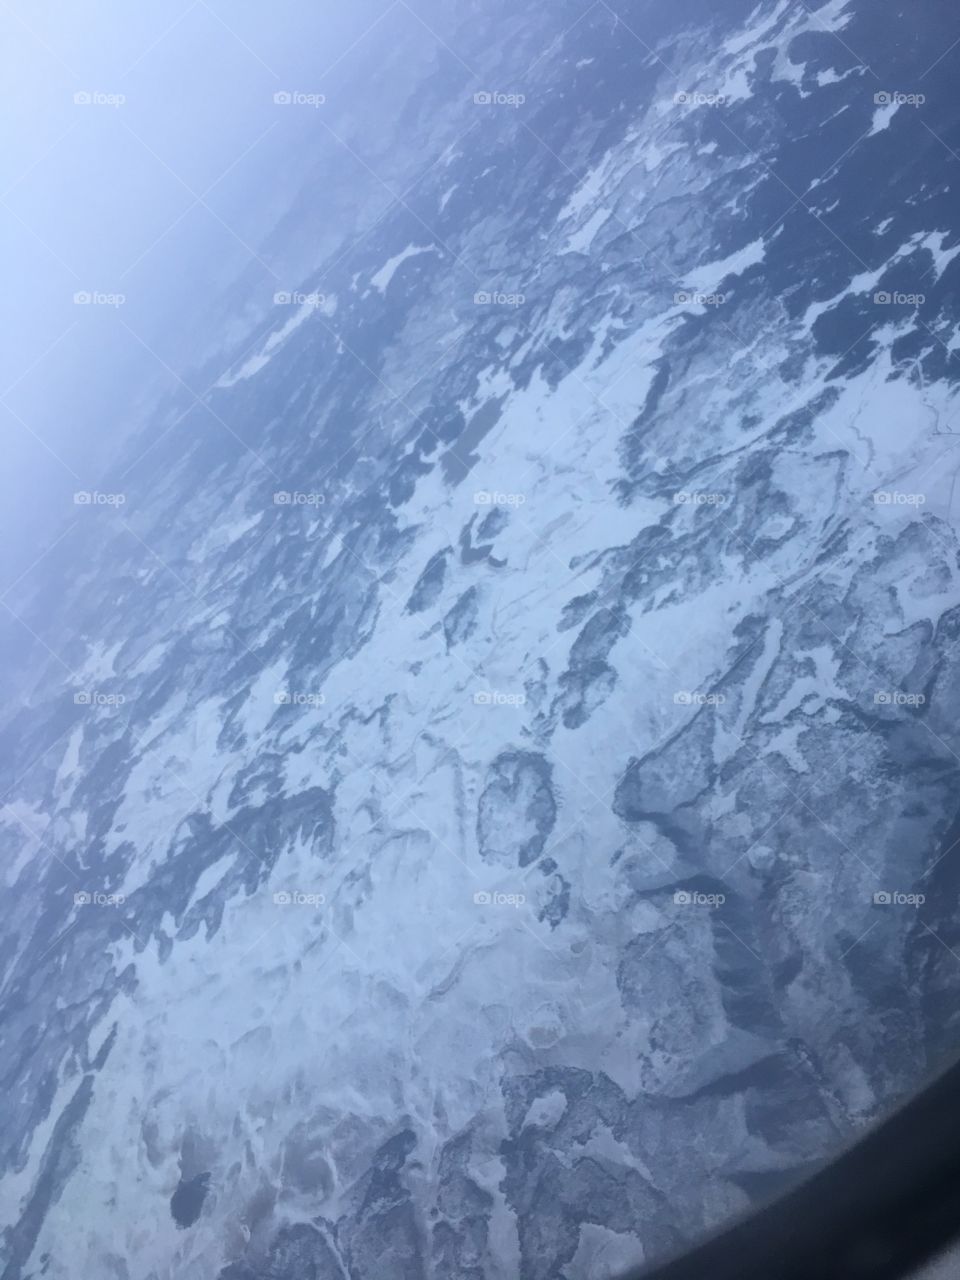 Snowy foot prints from birds eye view